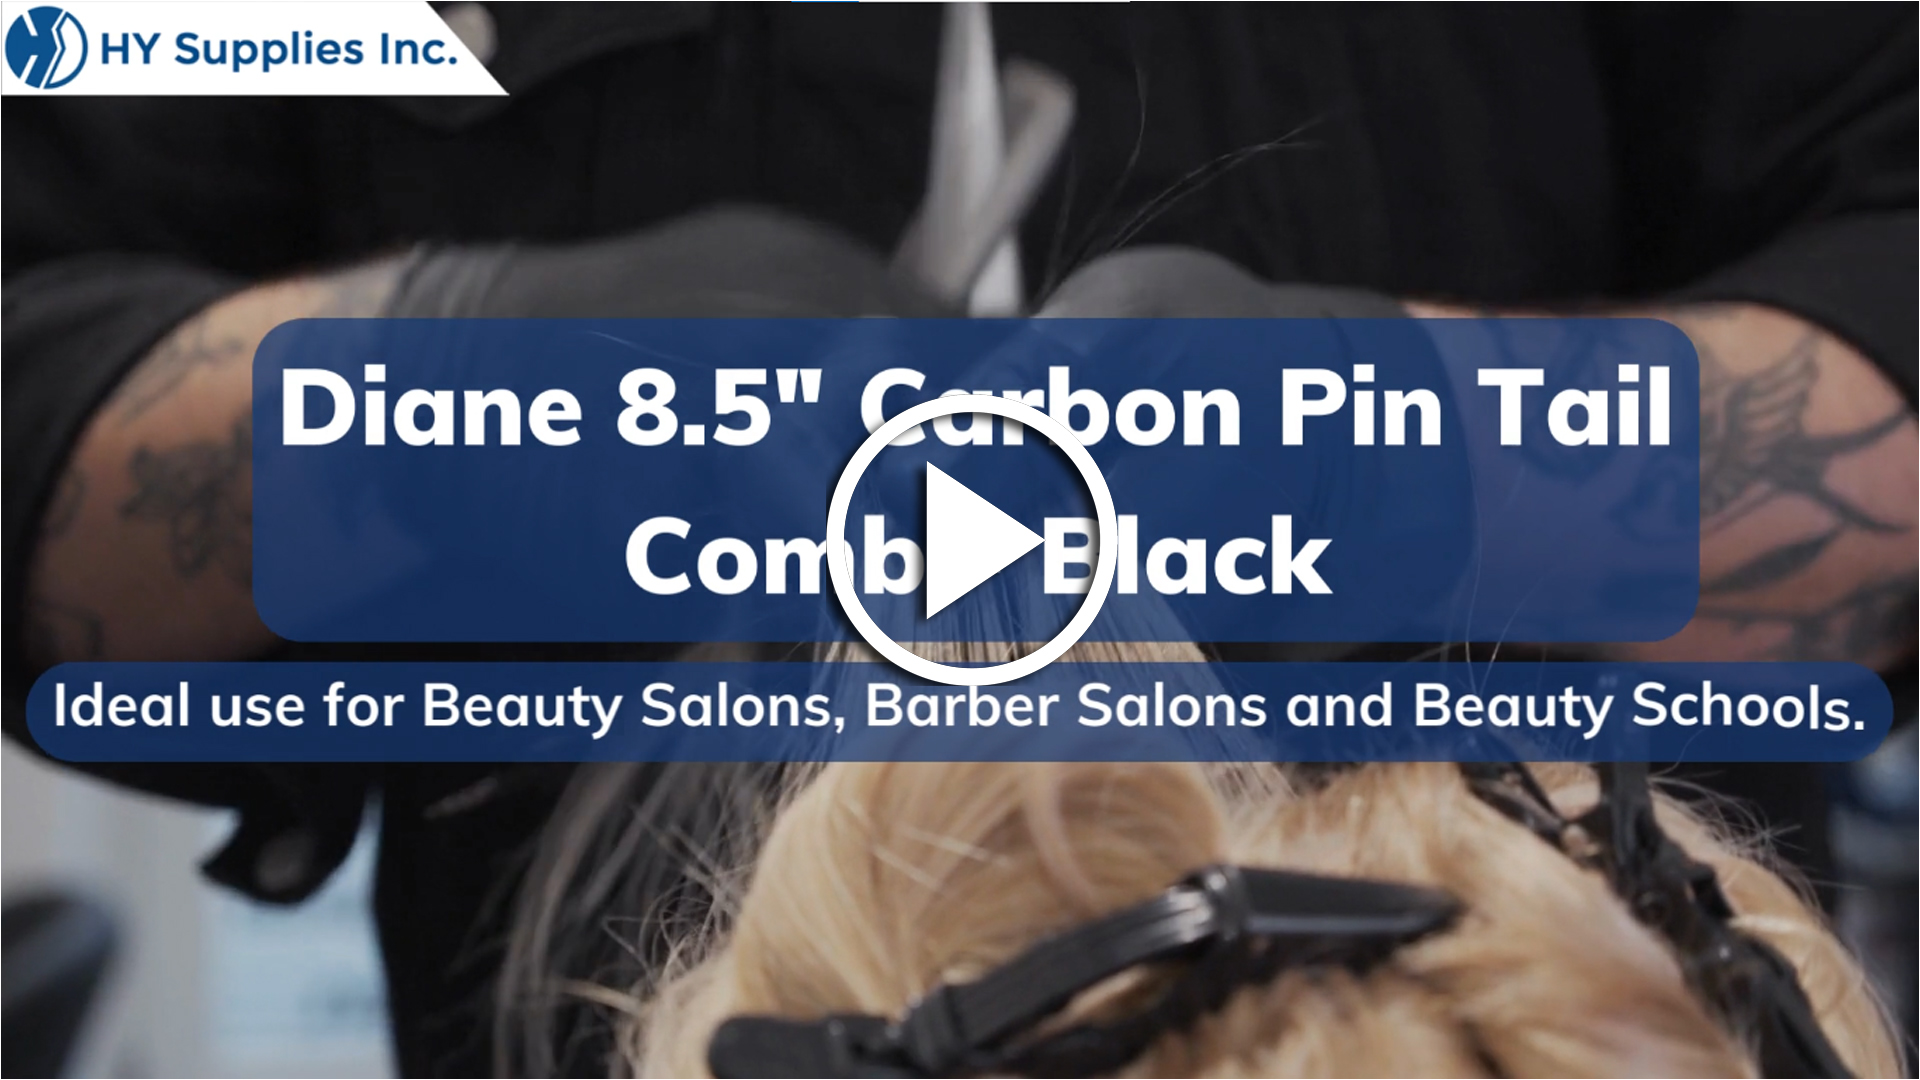 Diane 8.5" Carbon Pin Tail Comb - Black